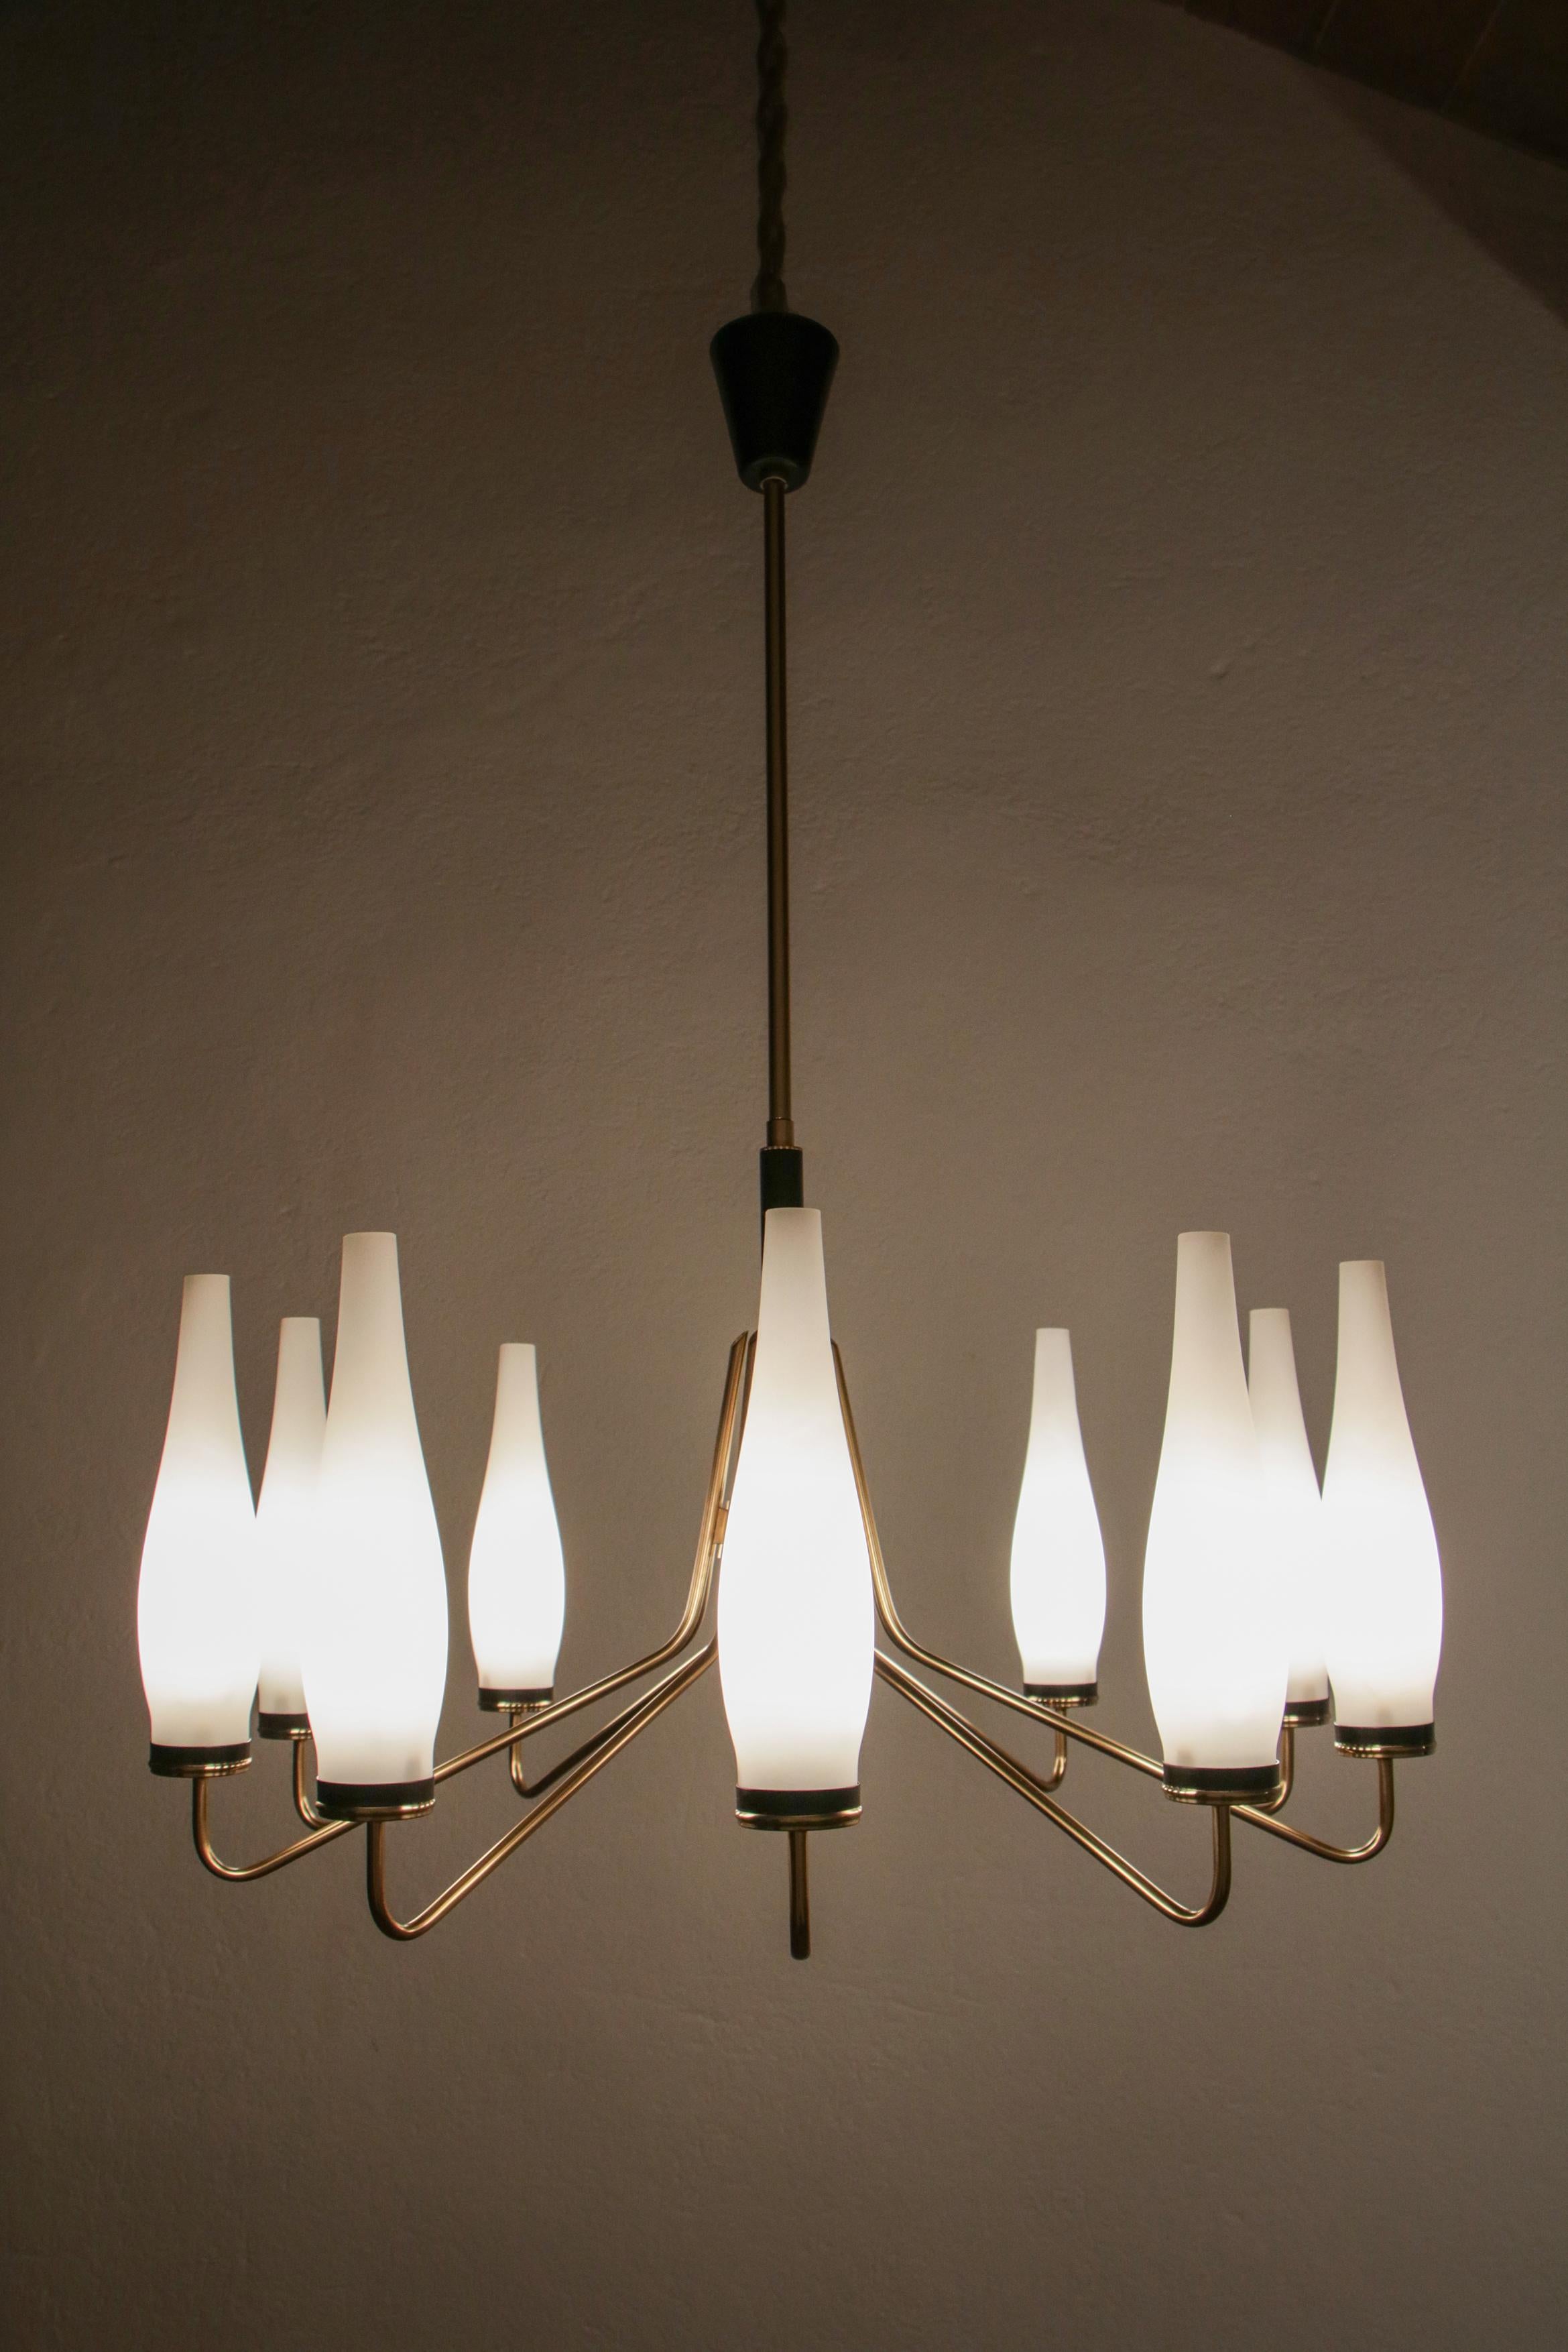 Mid-20th Century Italian Mid-Century Modern Ten Lights Chandelier Attributer to Stilnovo, 1950s For Sale